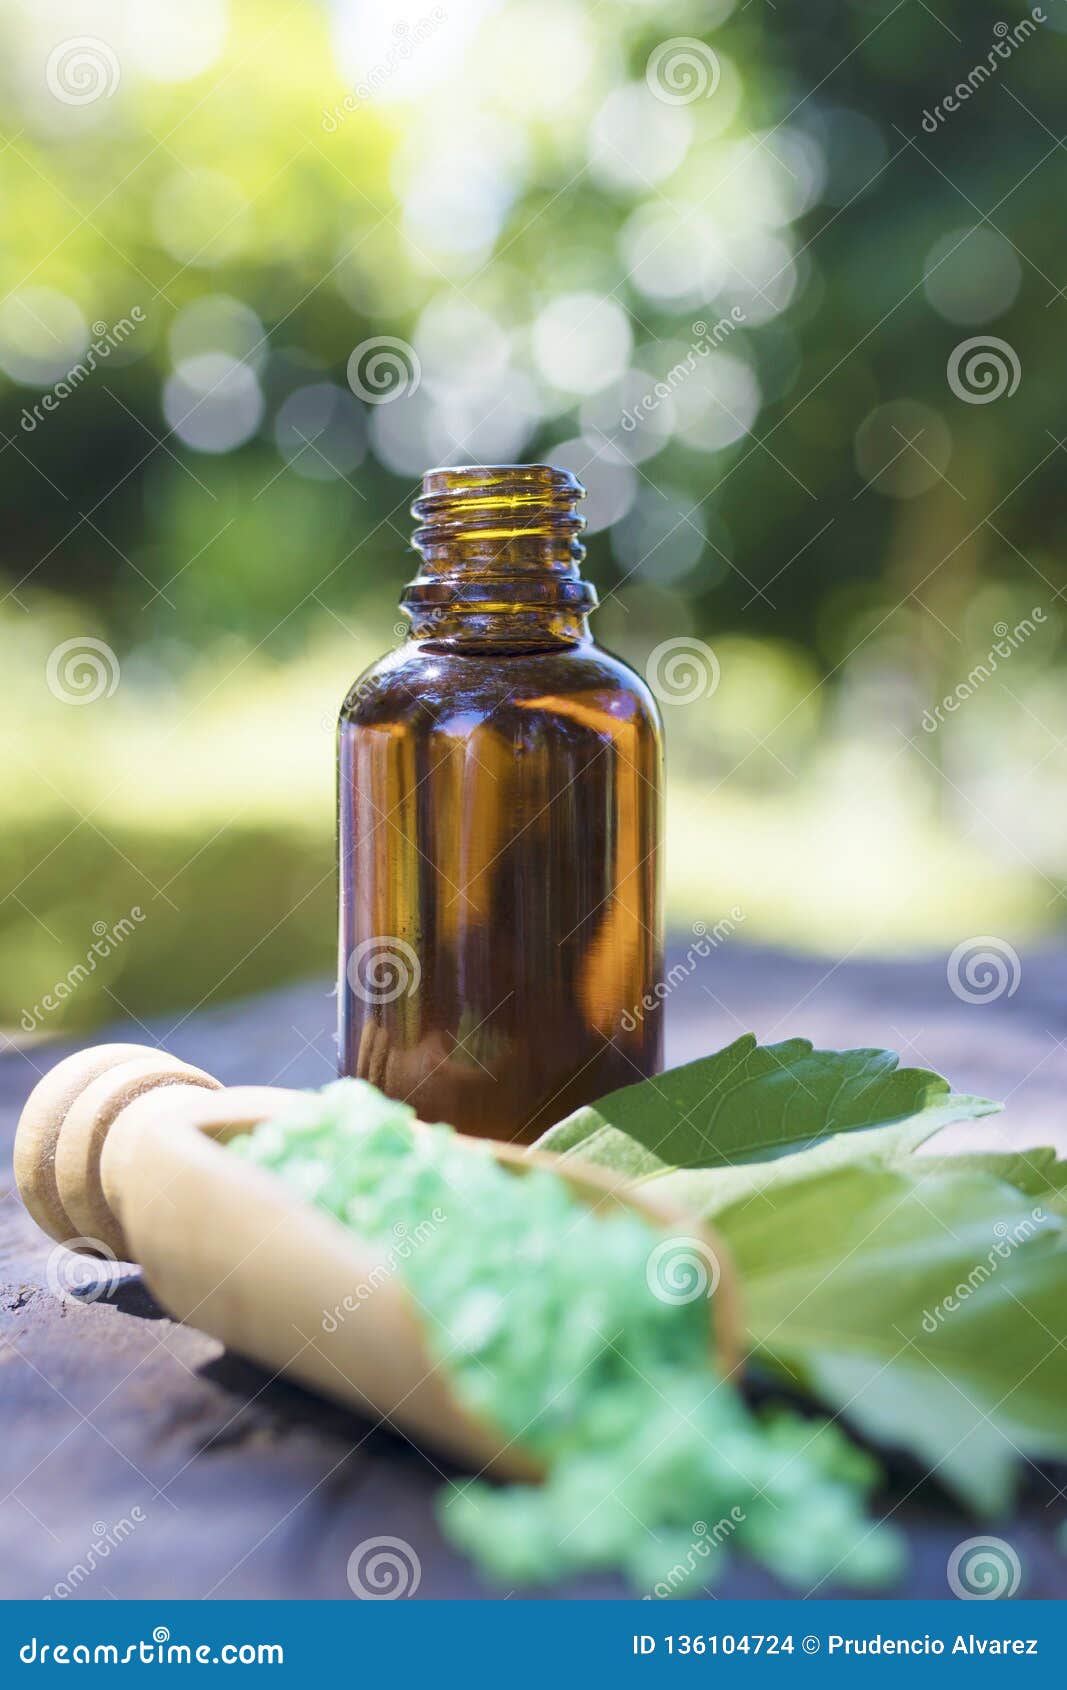 Aromatic oil stock photo. Image of etheric, medicine - 136104724